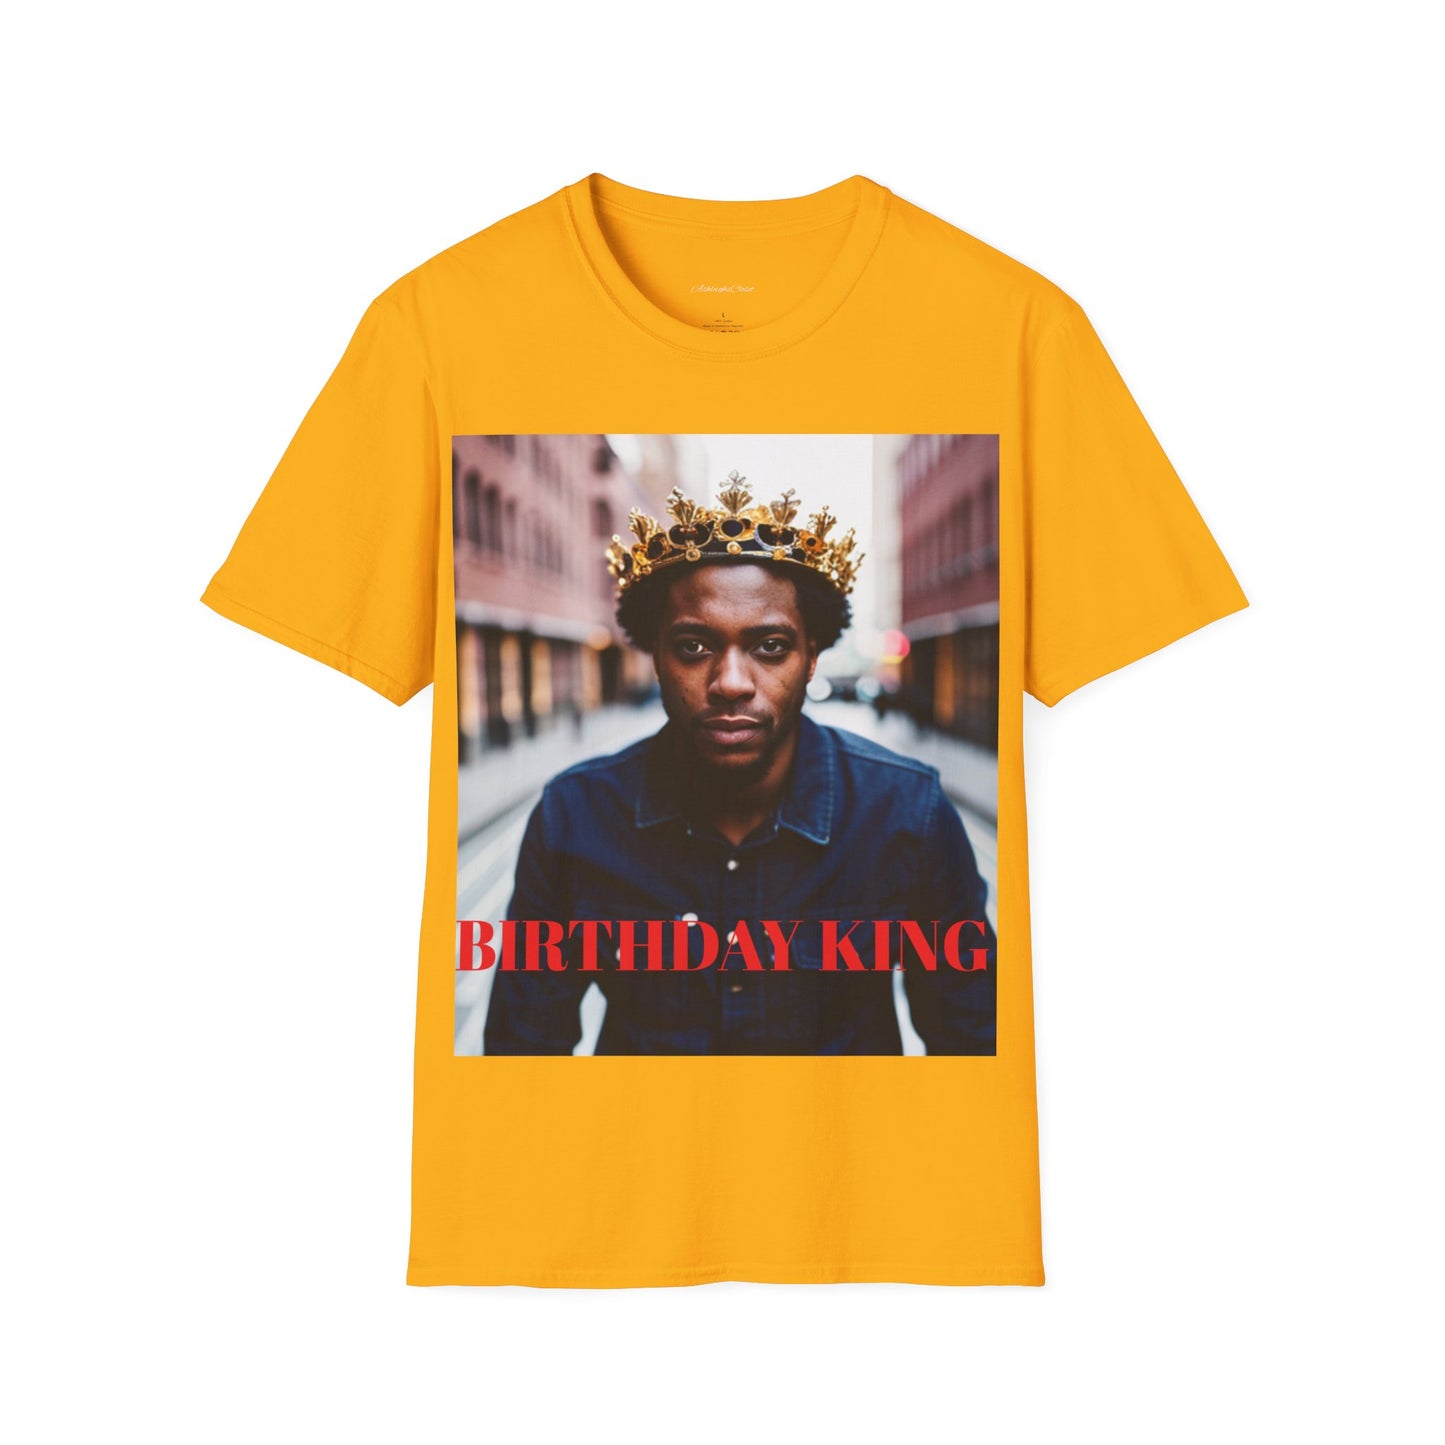 Birthday King T-Shirt by AshleighsCloset